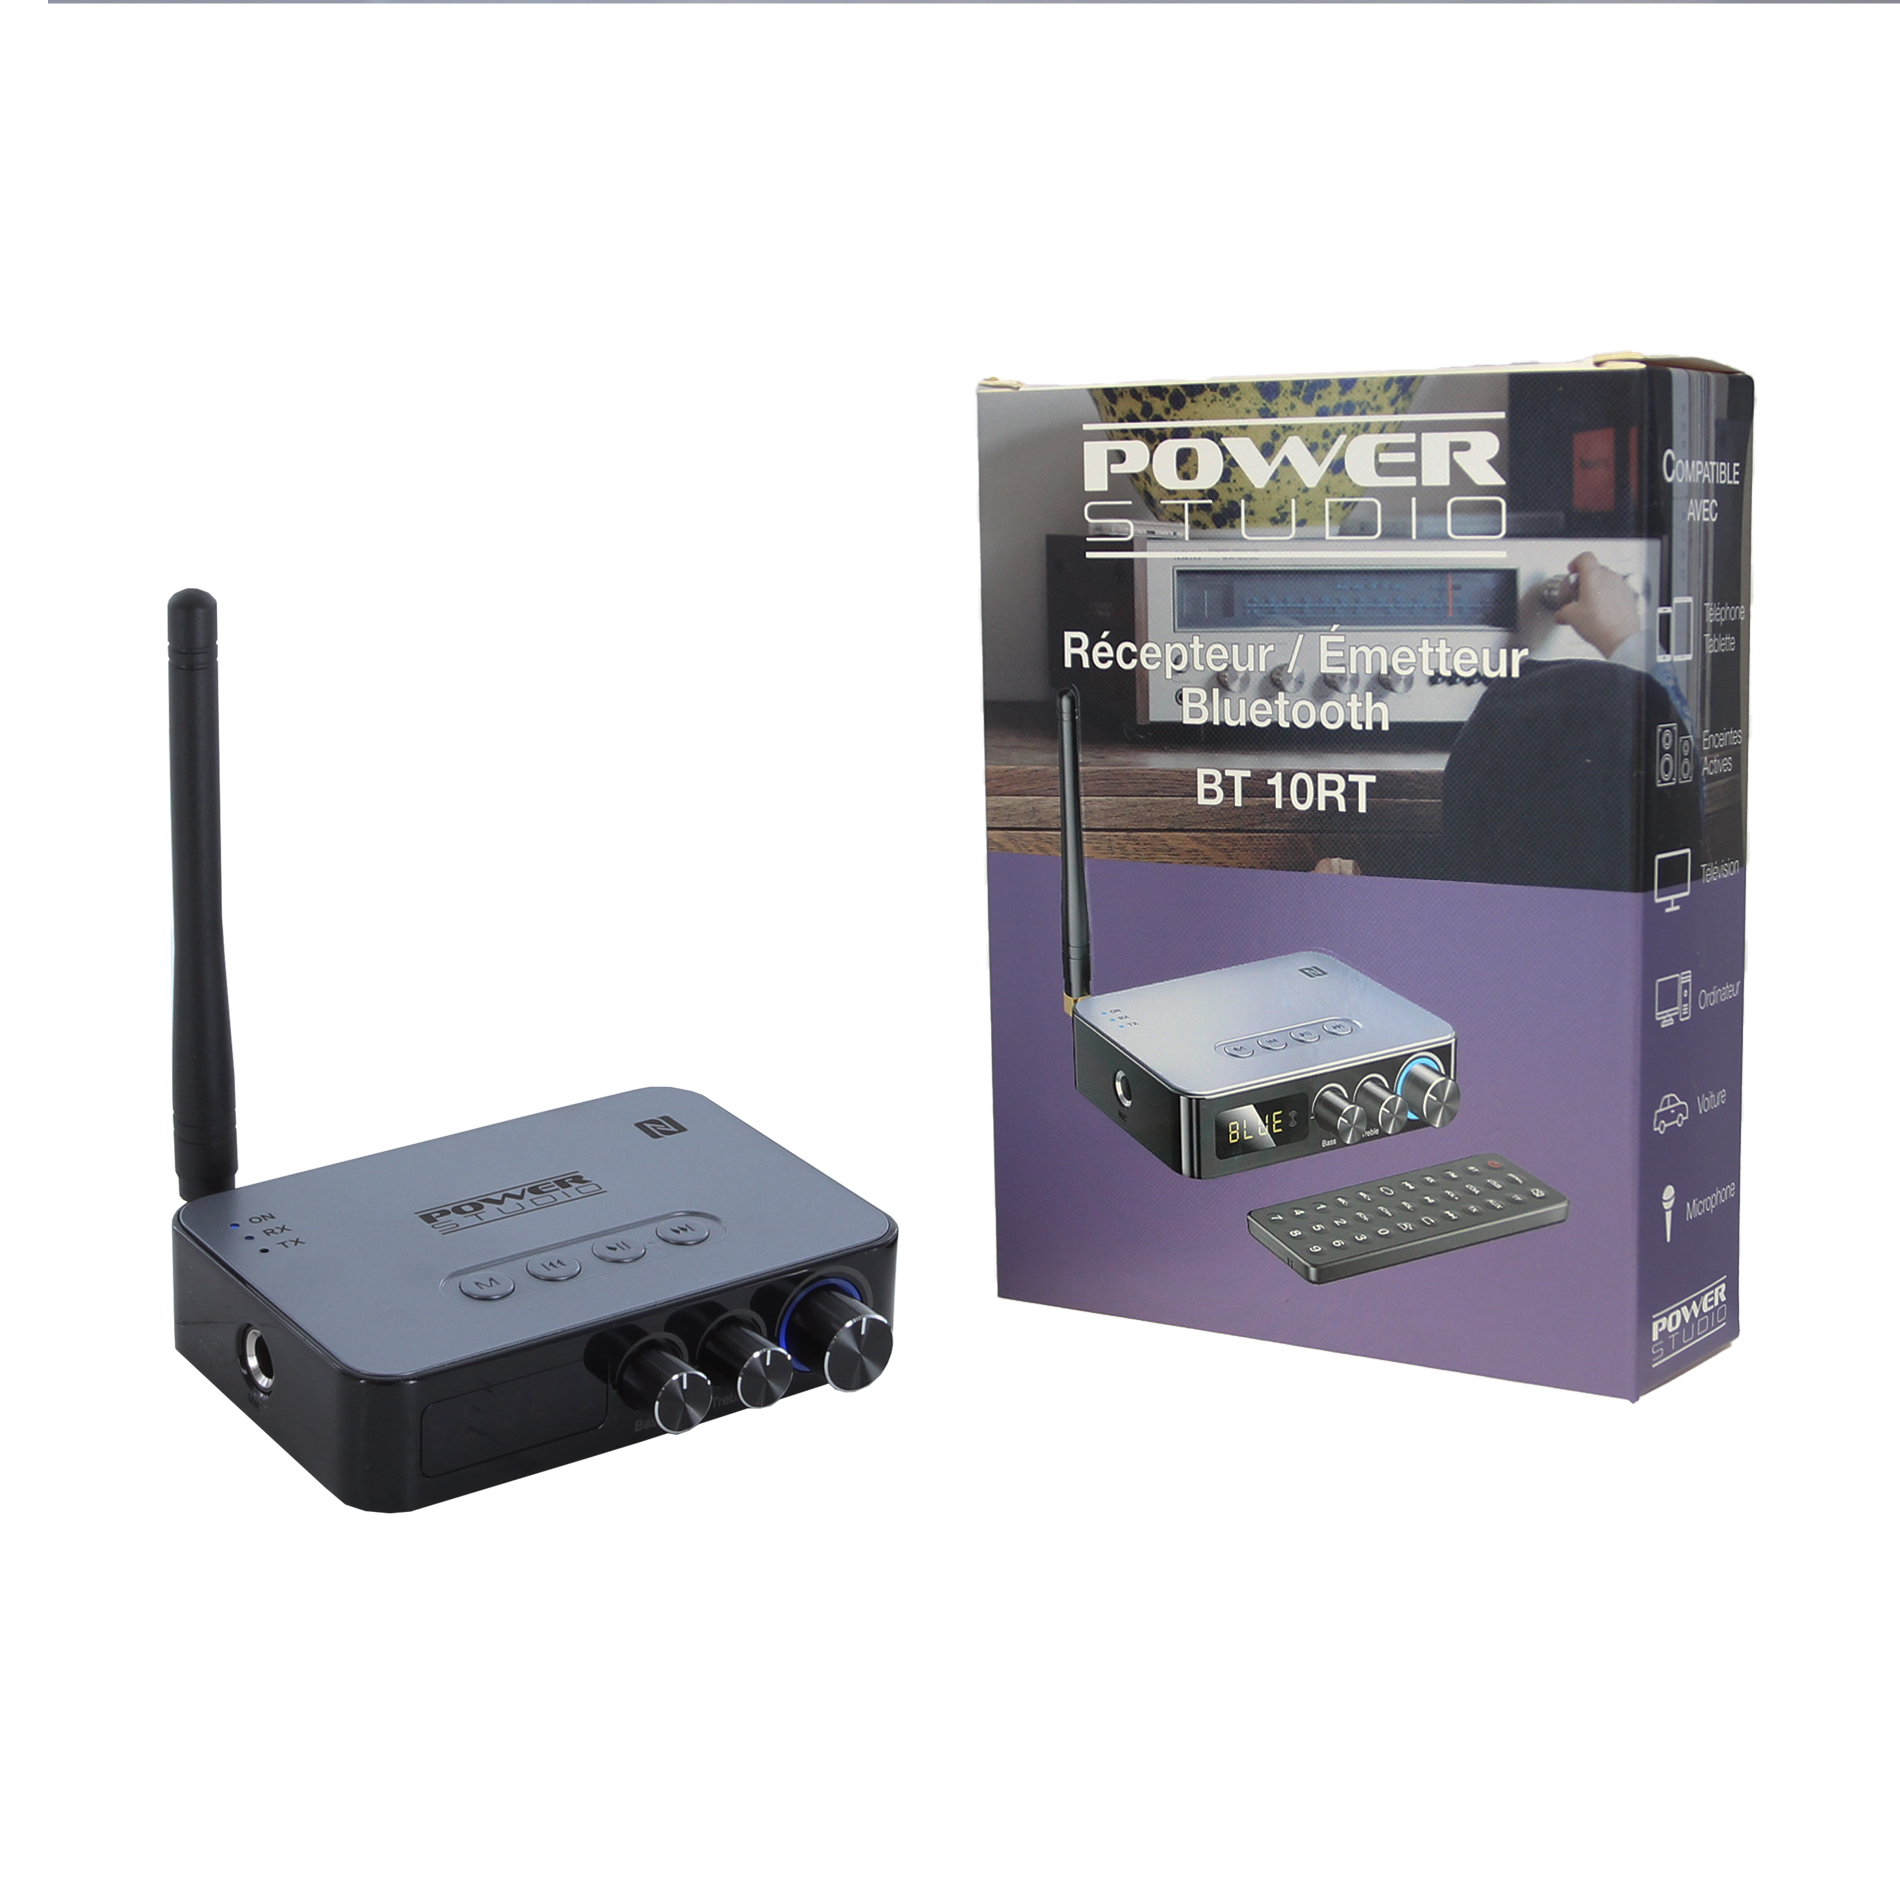 Power Studio Bt 10rt - Wireless System for Loudspeakers - Variation 5